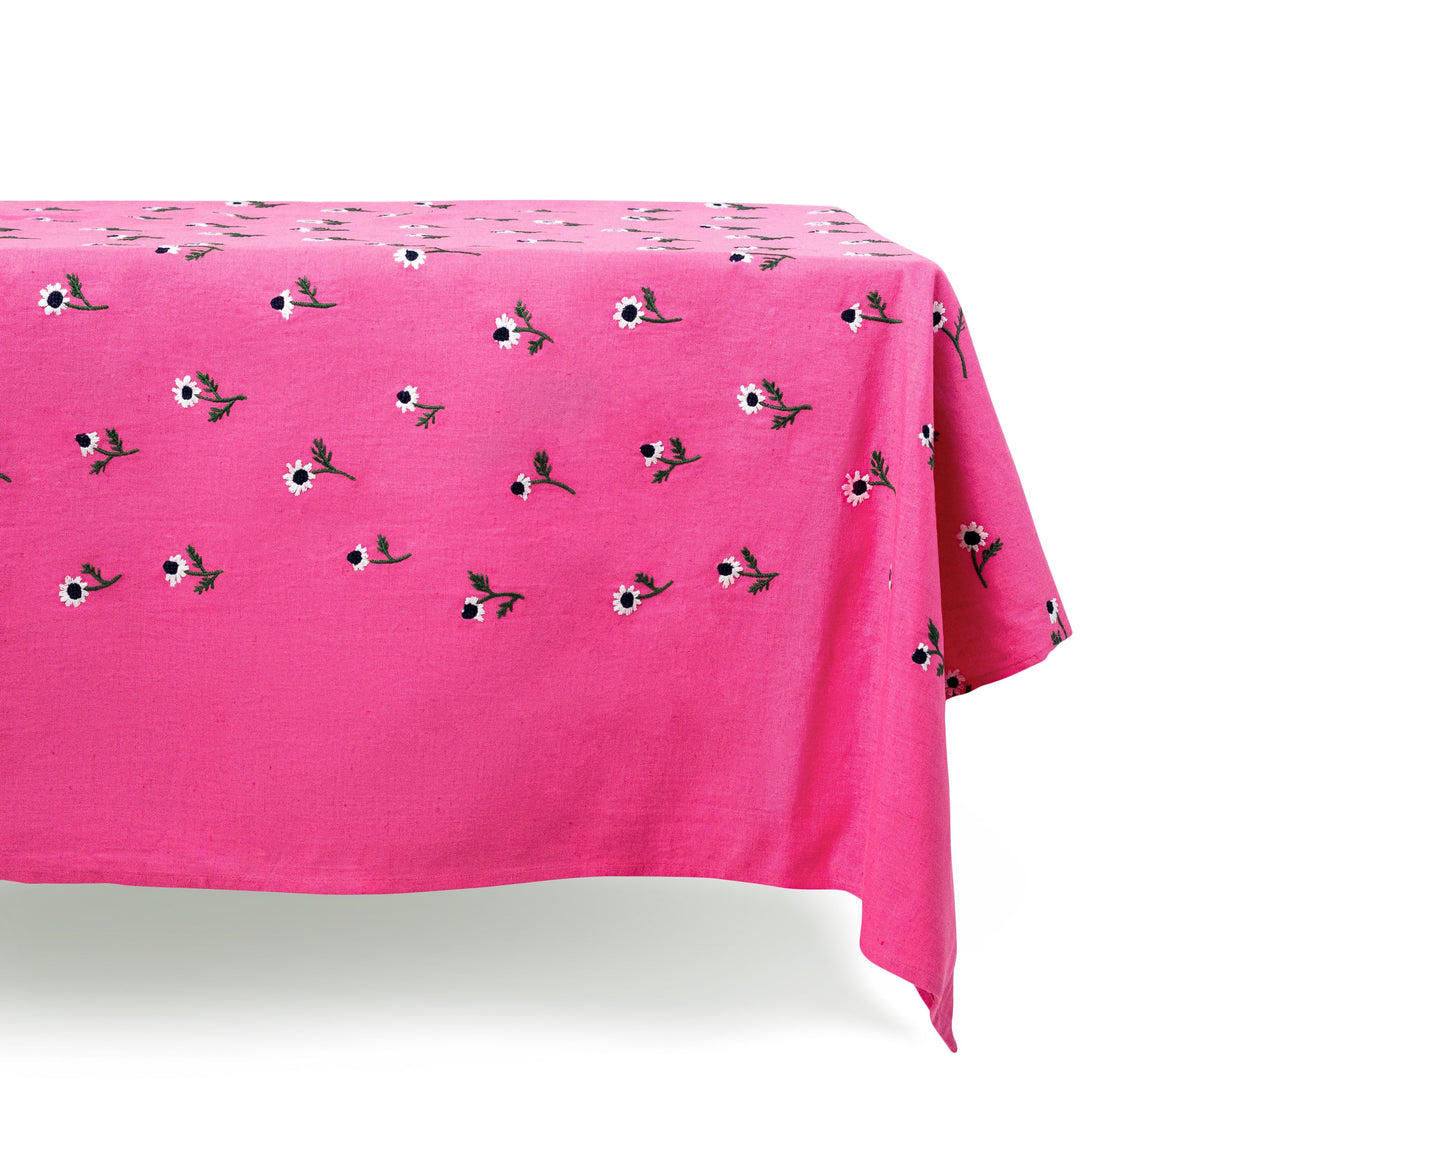 Manzanilla Bougainvillea Rectangular Tablecloth for 10